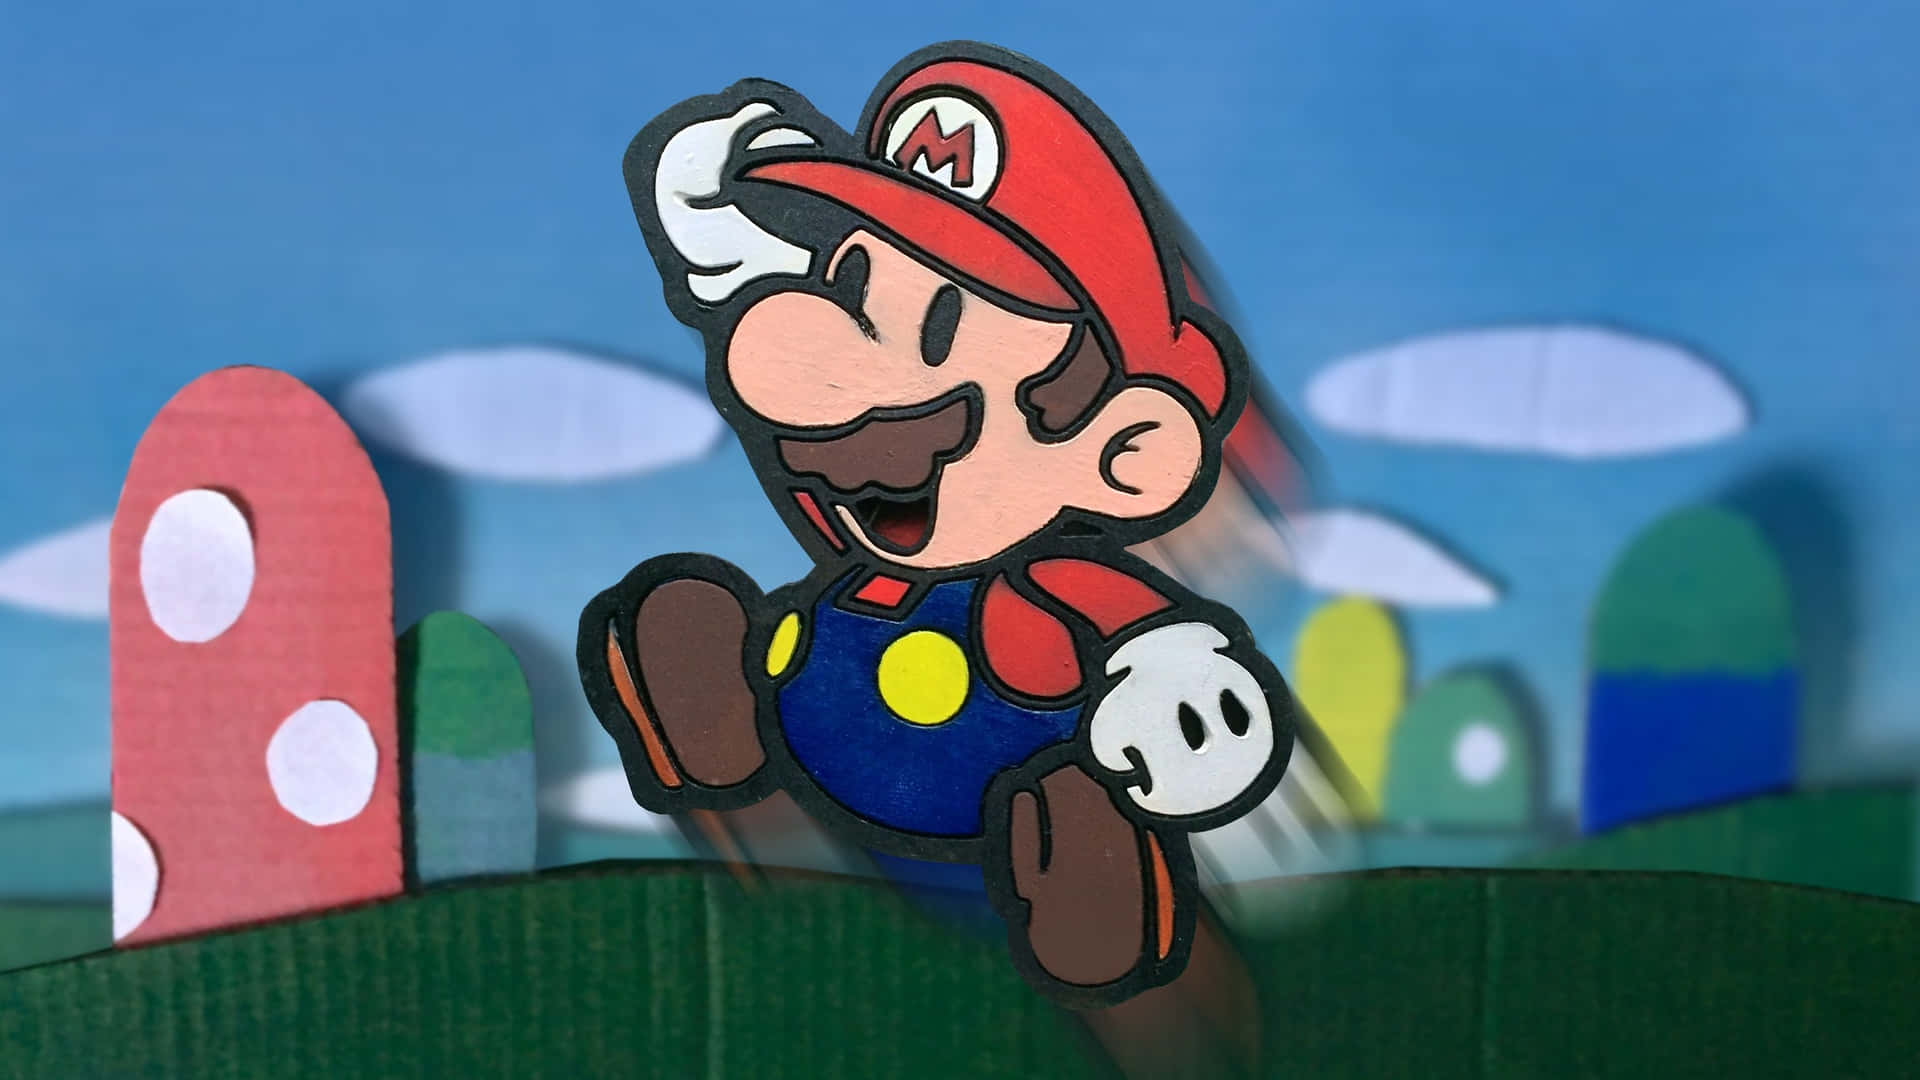 Ikonet plumber, Mario, hopper over Bowsers slot.